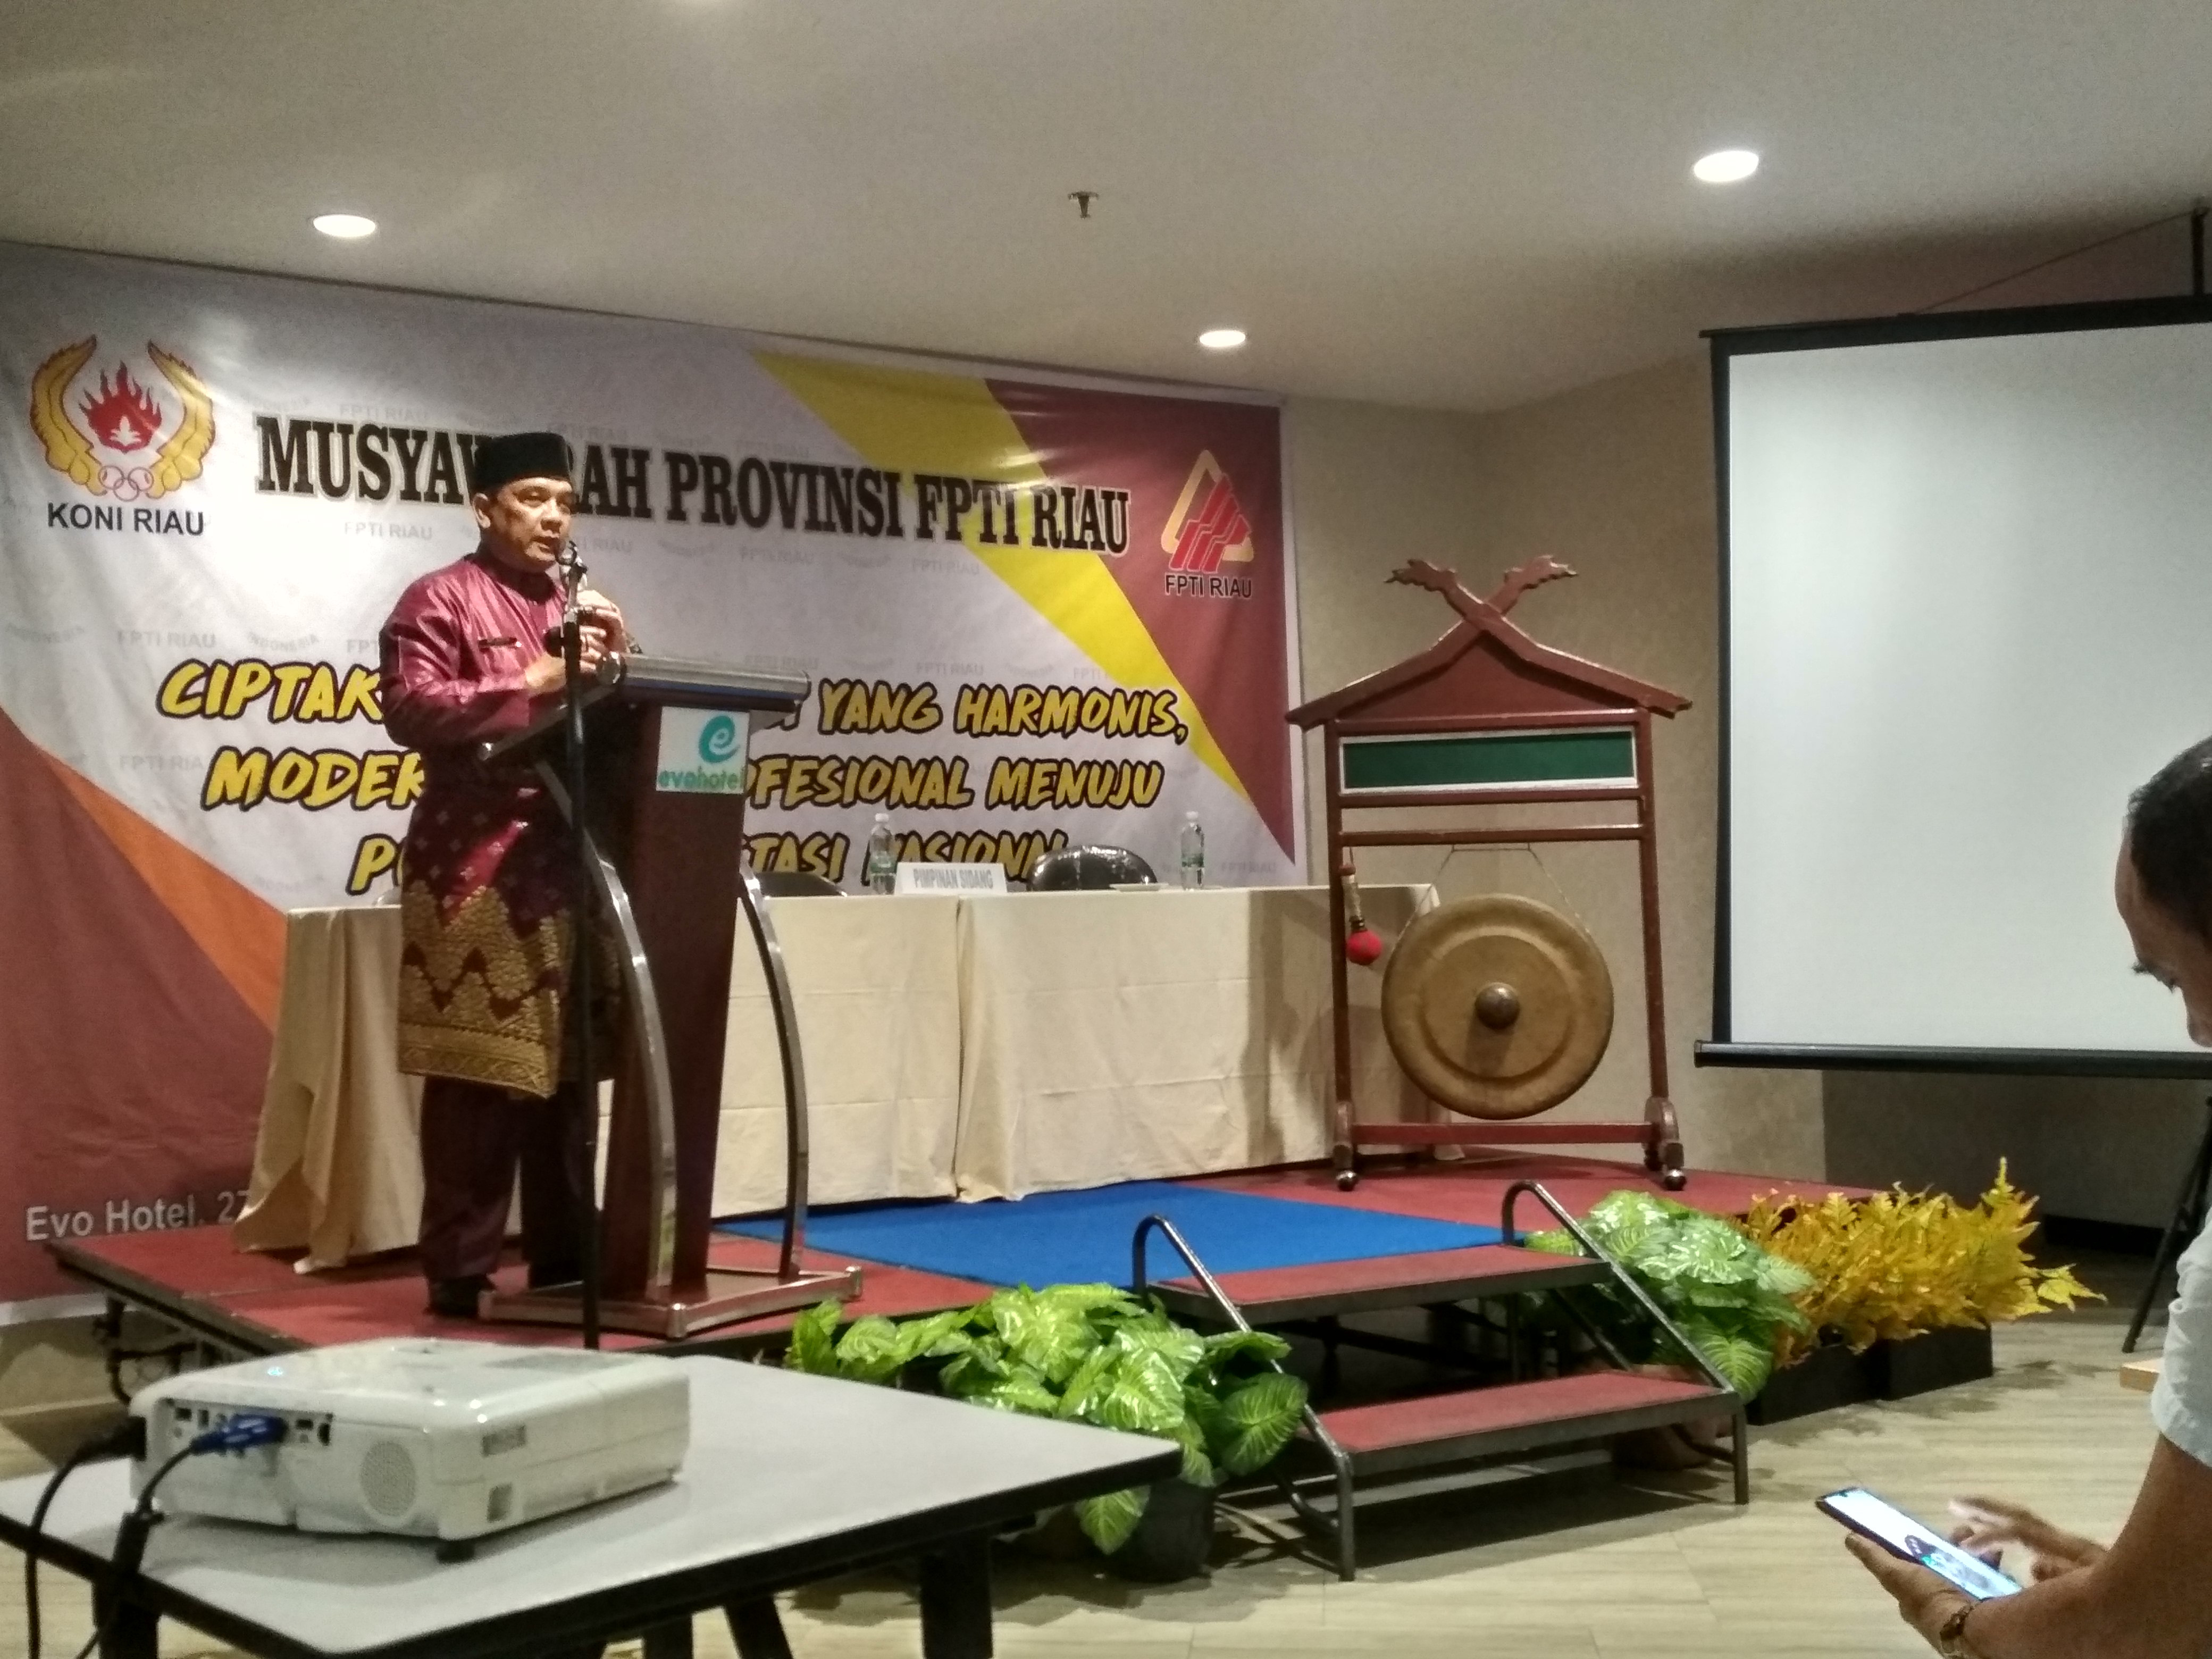 Buka Musprov FPTI Riau, Wagub Harapkan Pemimpin Olahraga yang Baik